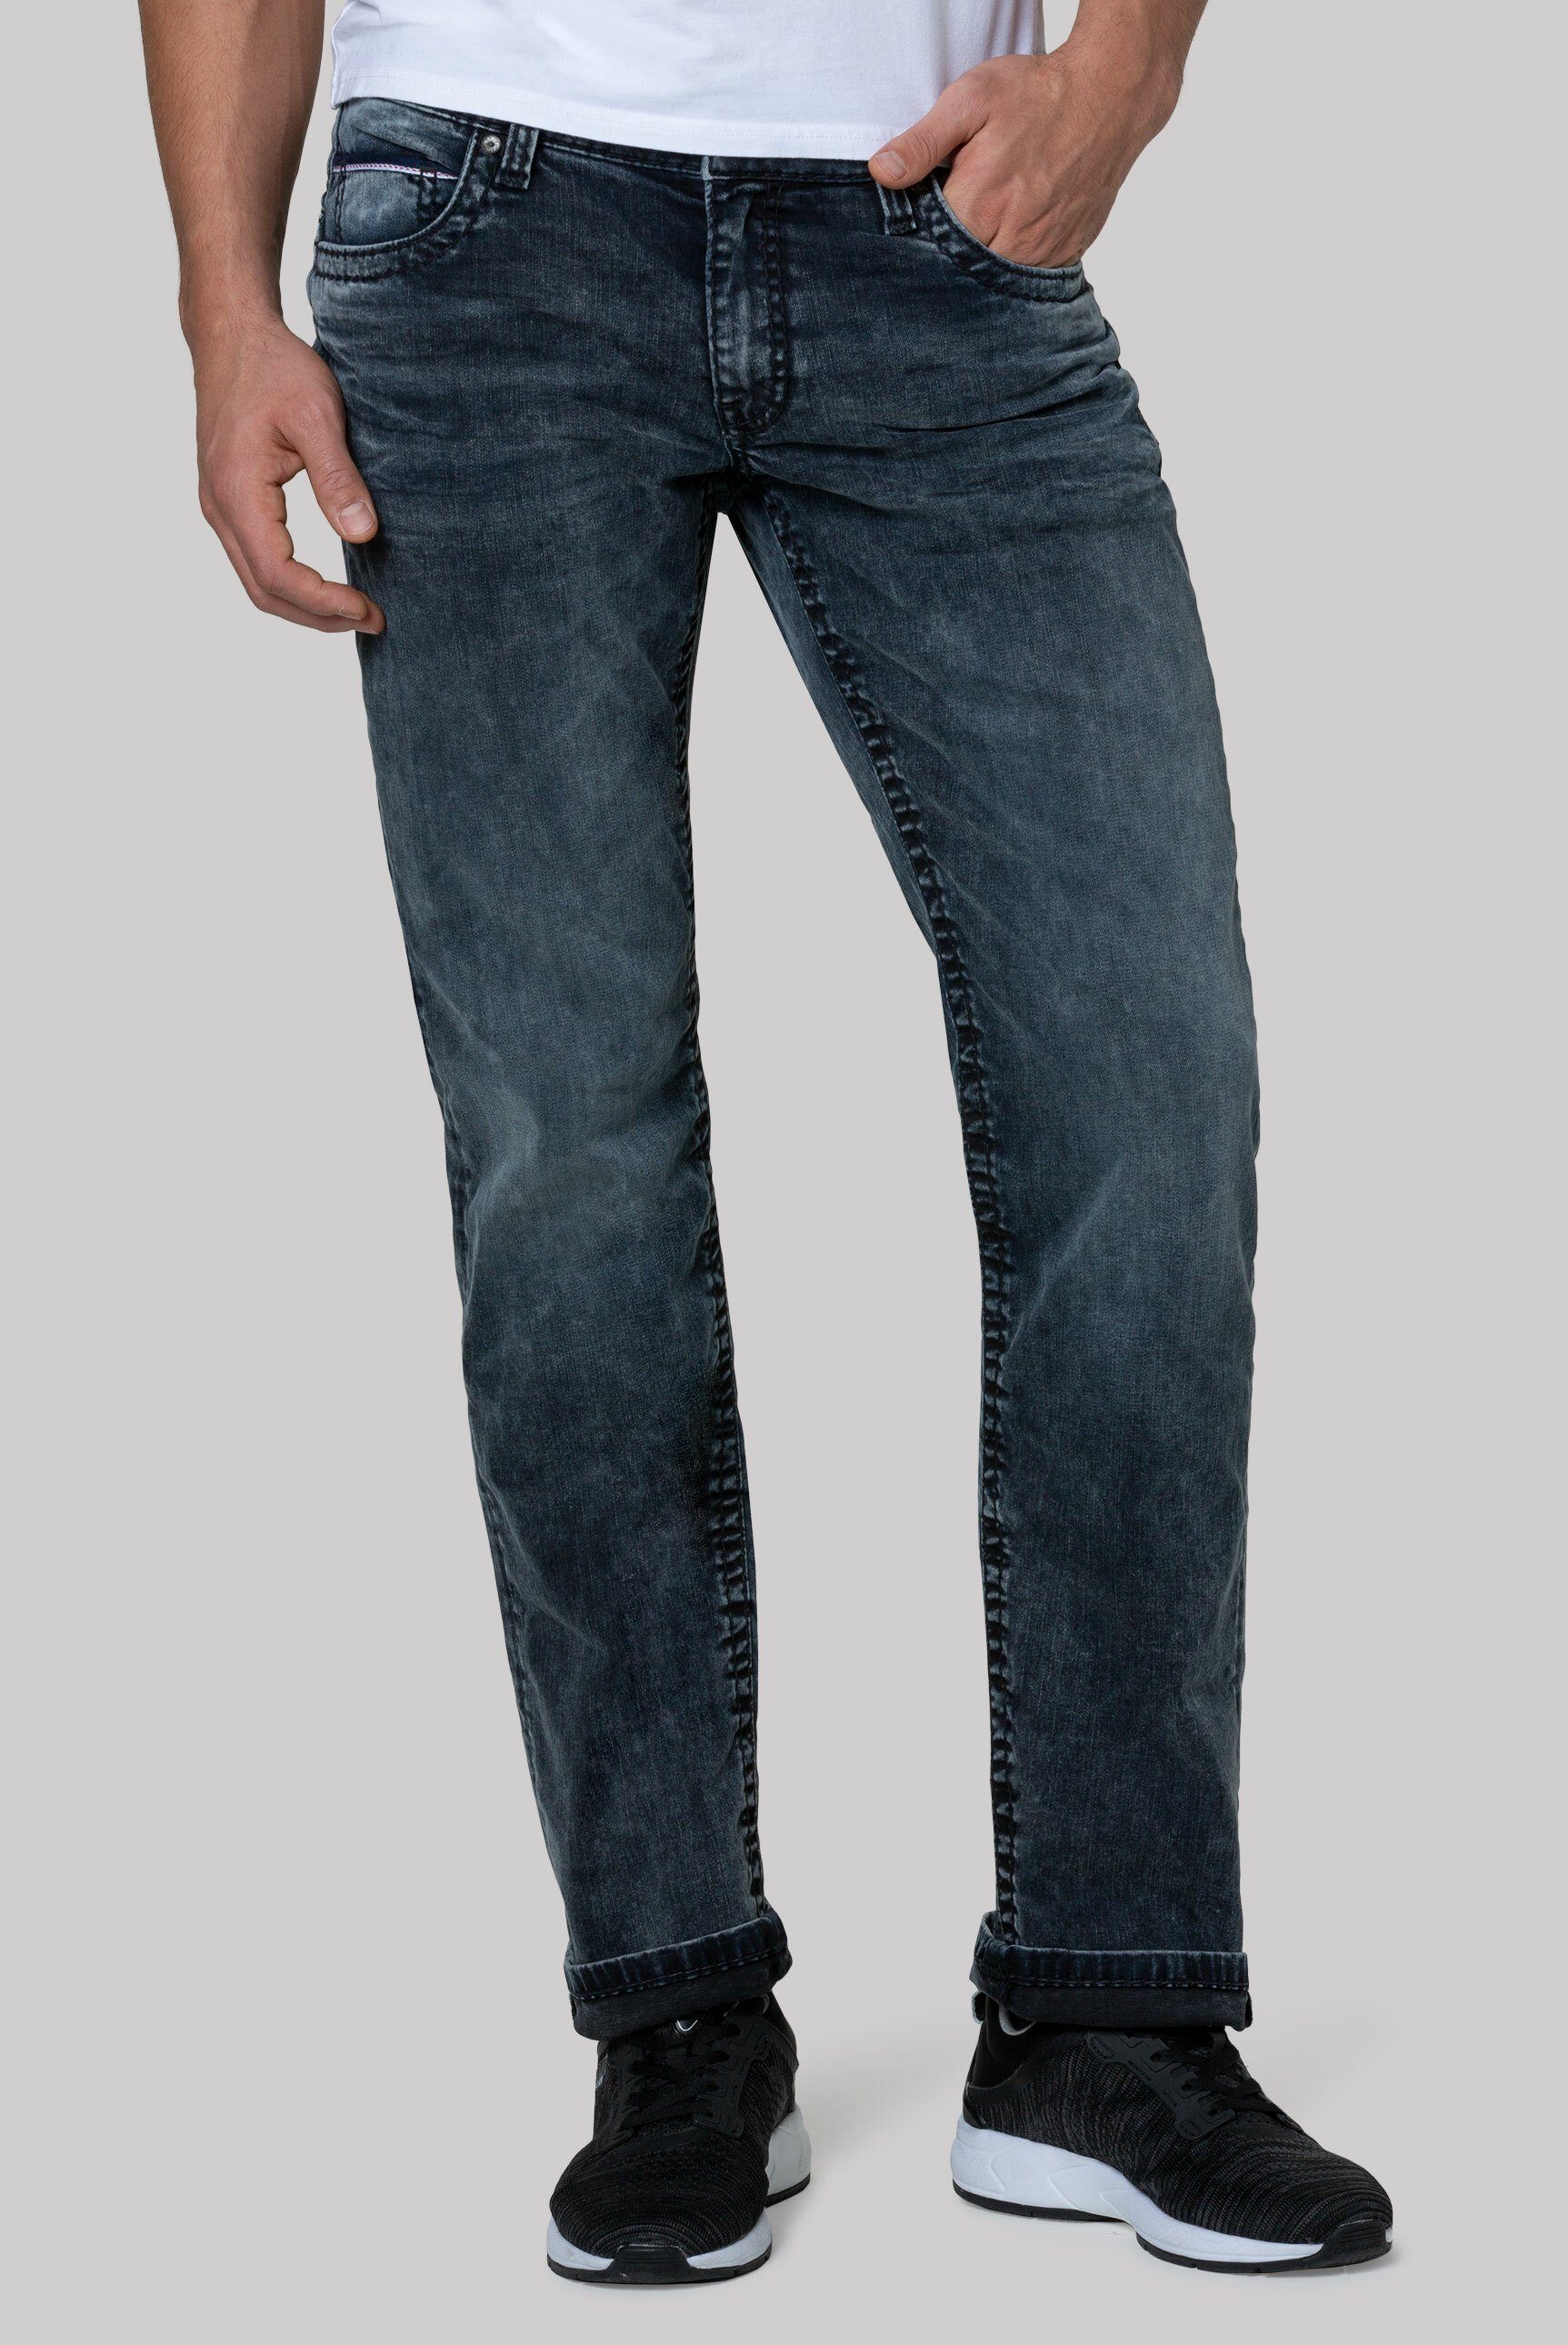 CAMP DAVID Comfort-fit-Jeans mit Stretch-Anteil | OTTO